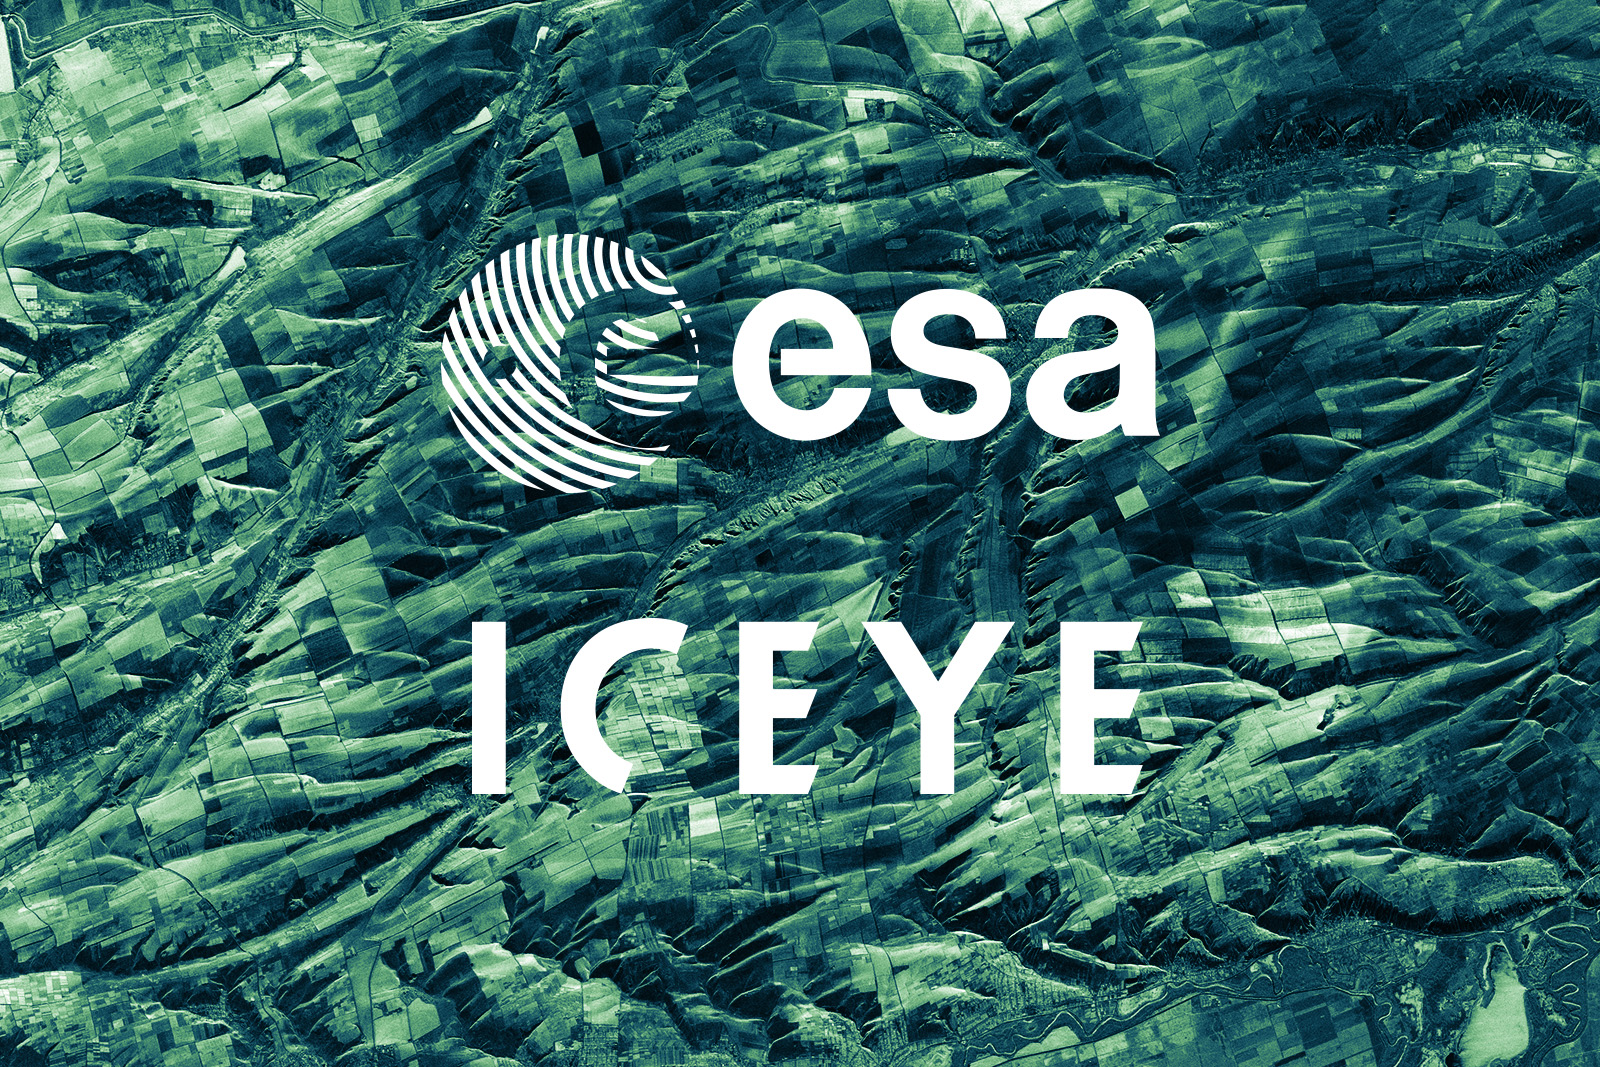 ICEYE-ESA-Third-Party-Mission-Under-Evaluation-ICEYE-SAR-Data